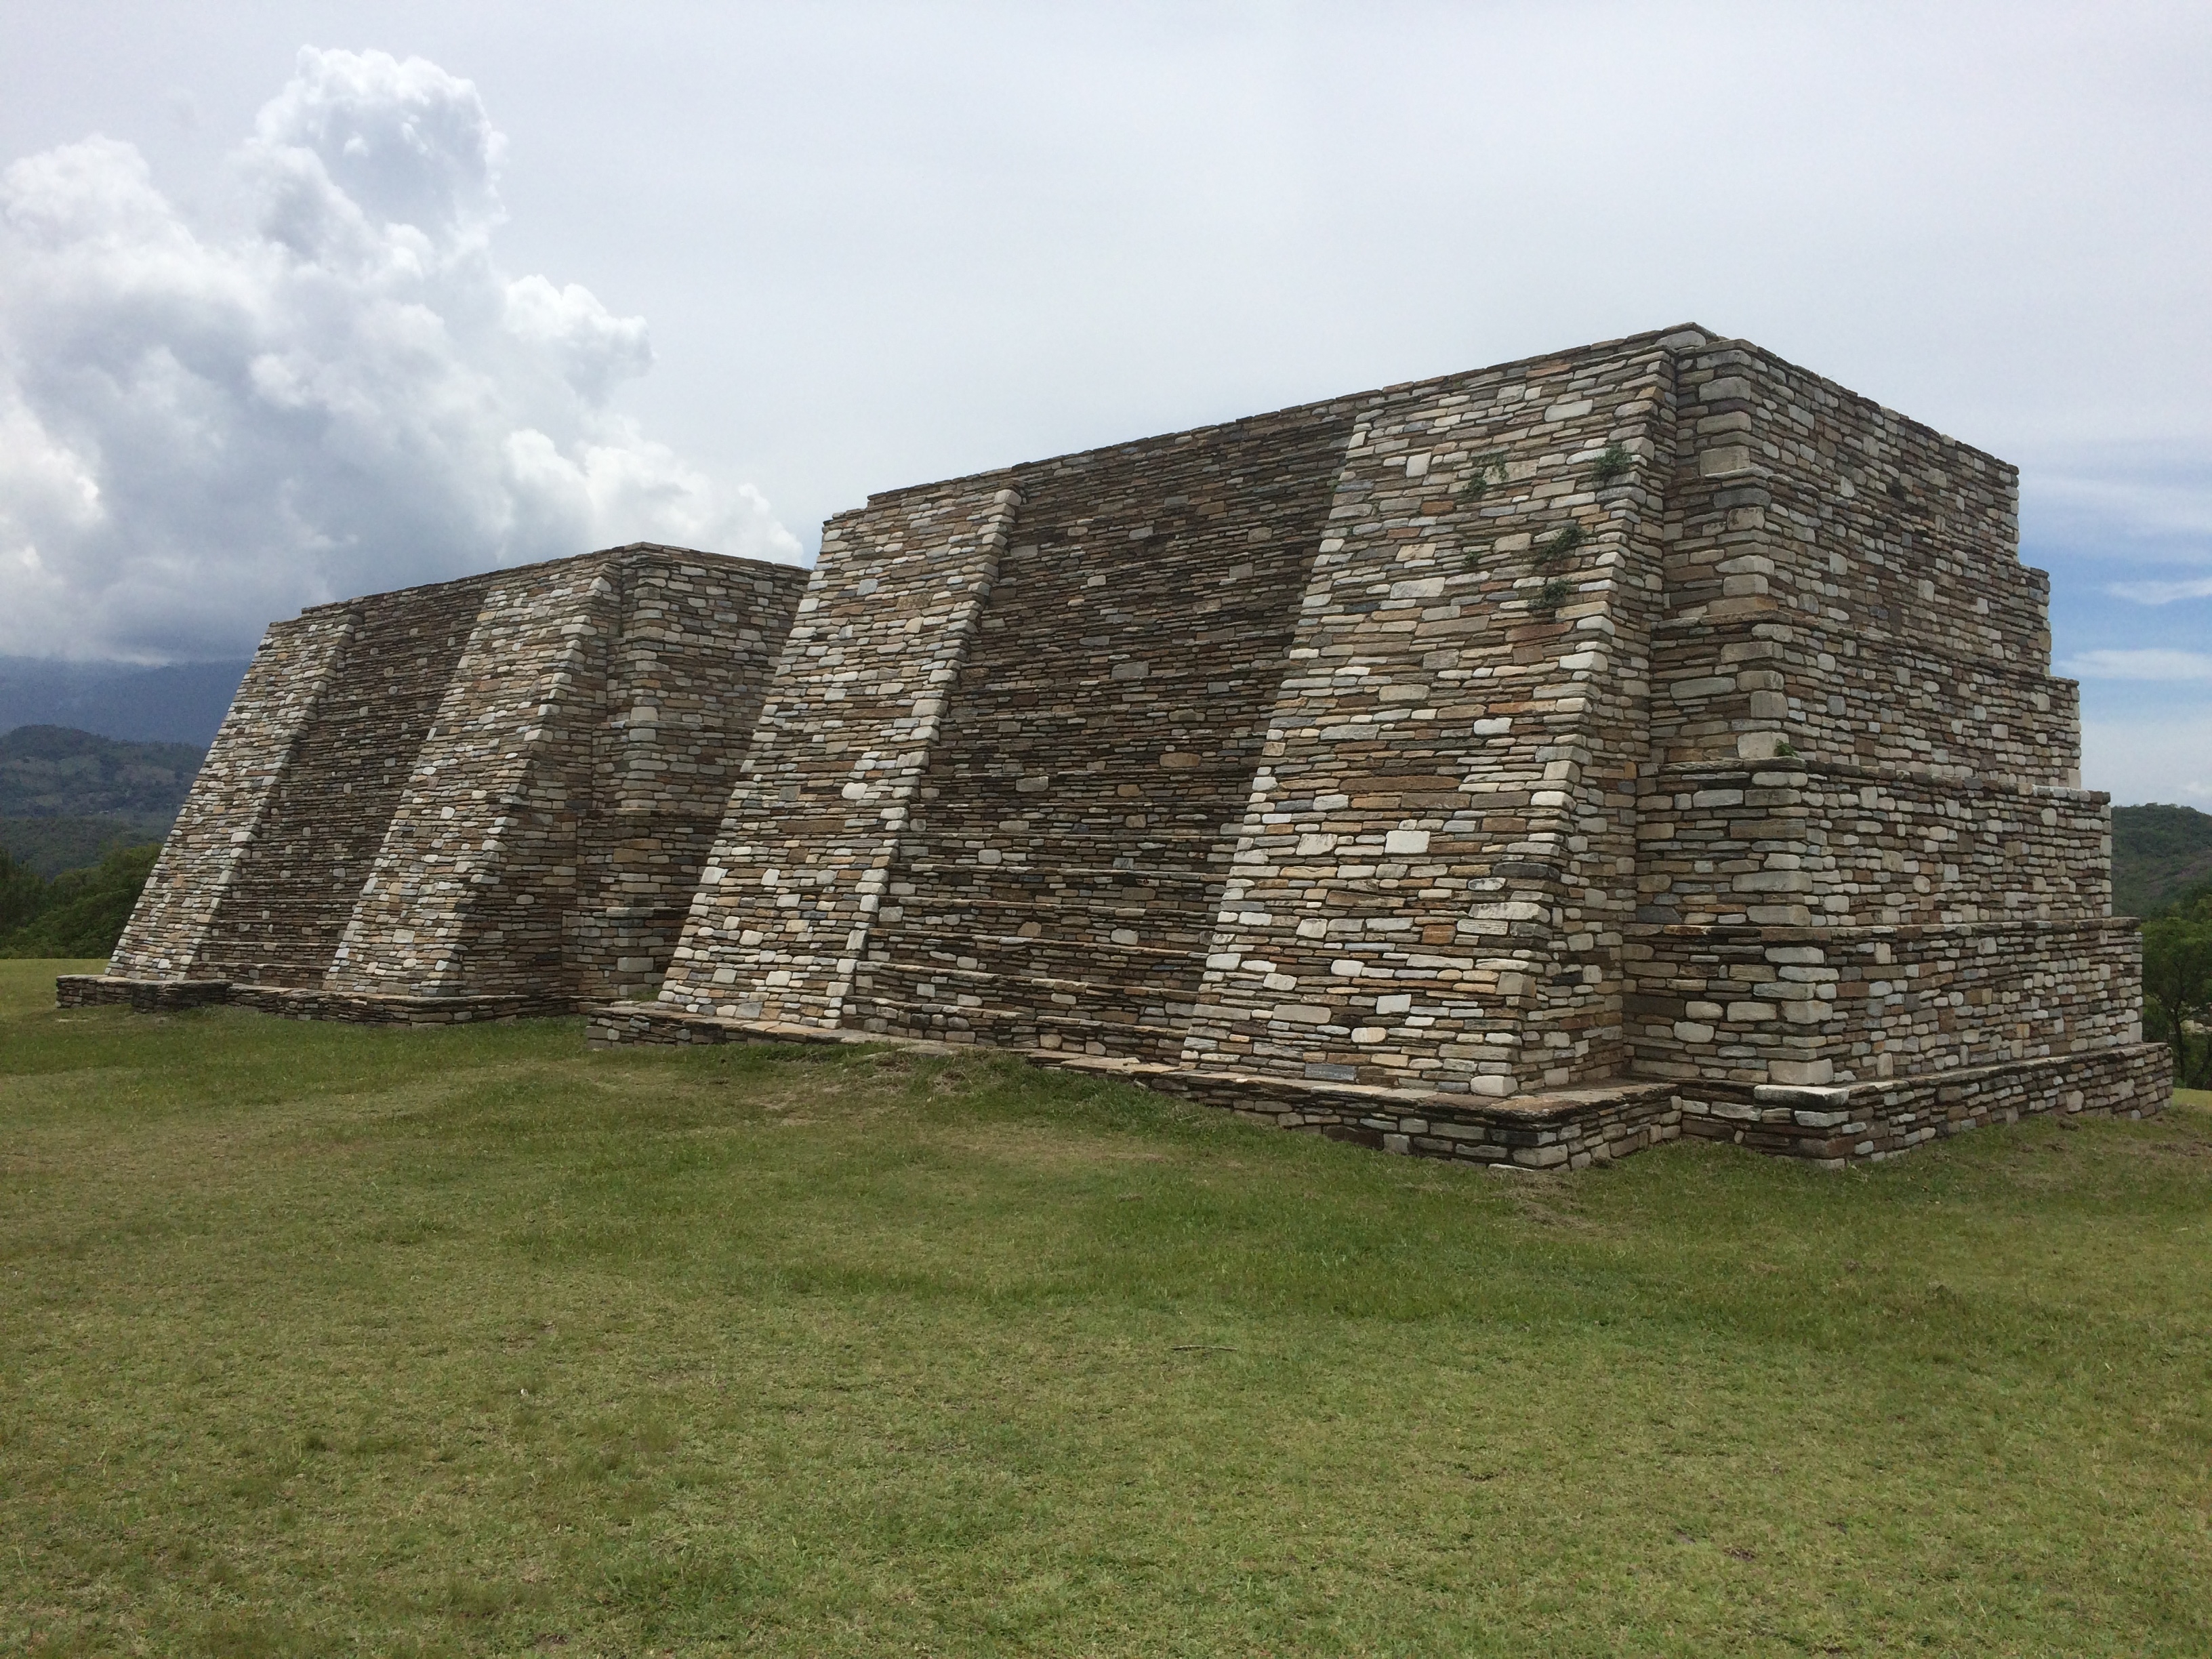 Archaeological Park Chuwa Nima’ Ab’aj Marker